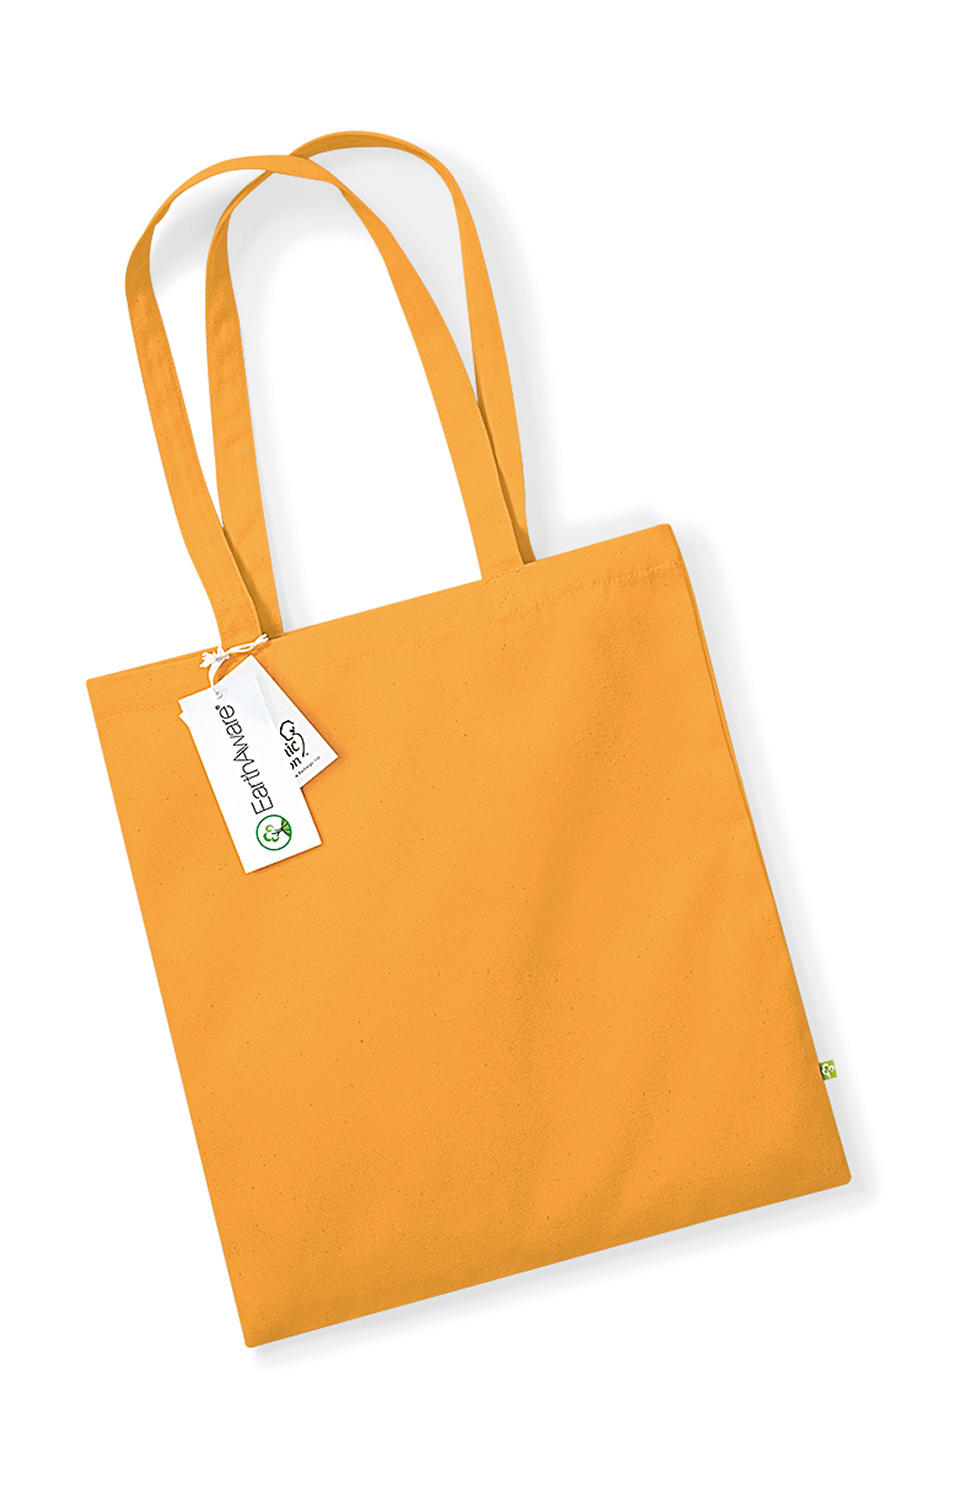  EarthAware? Organic Bag for Life in Farbe Amber